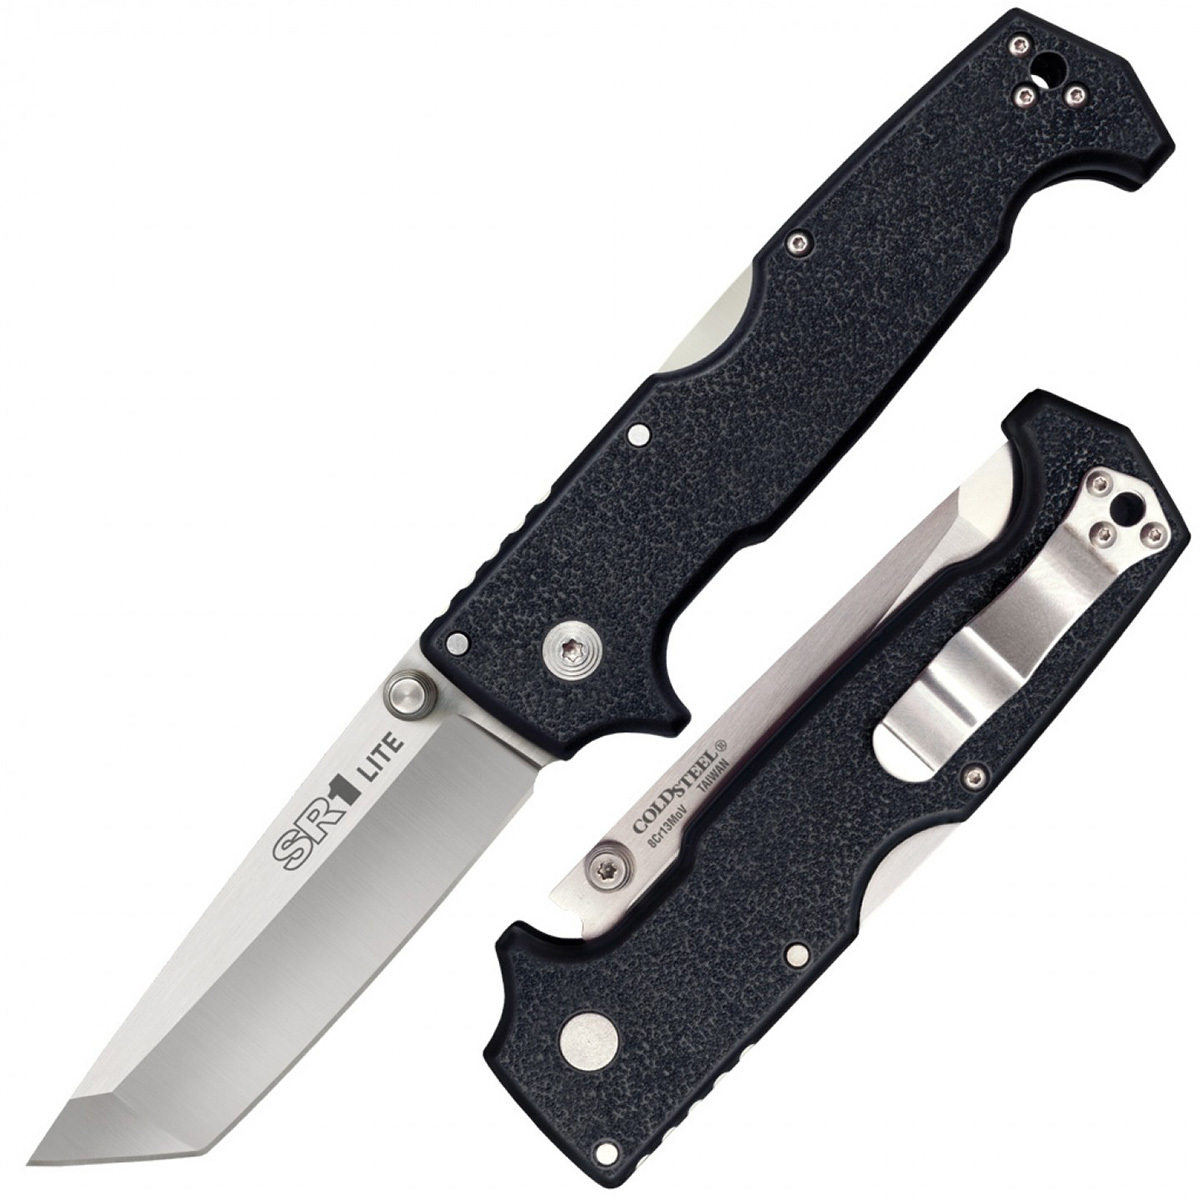 Нож складной Cold Steel SR-1 Lite Tanto, сталь 8Cr13MoV, рукоять grivory, black